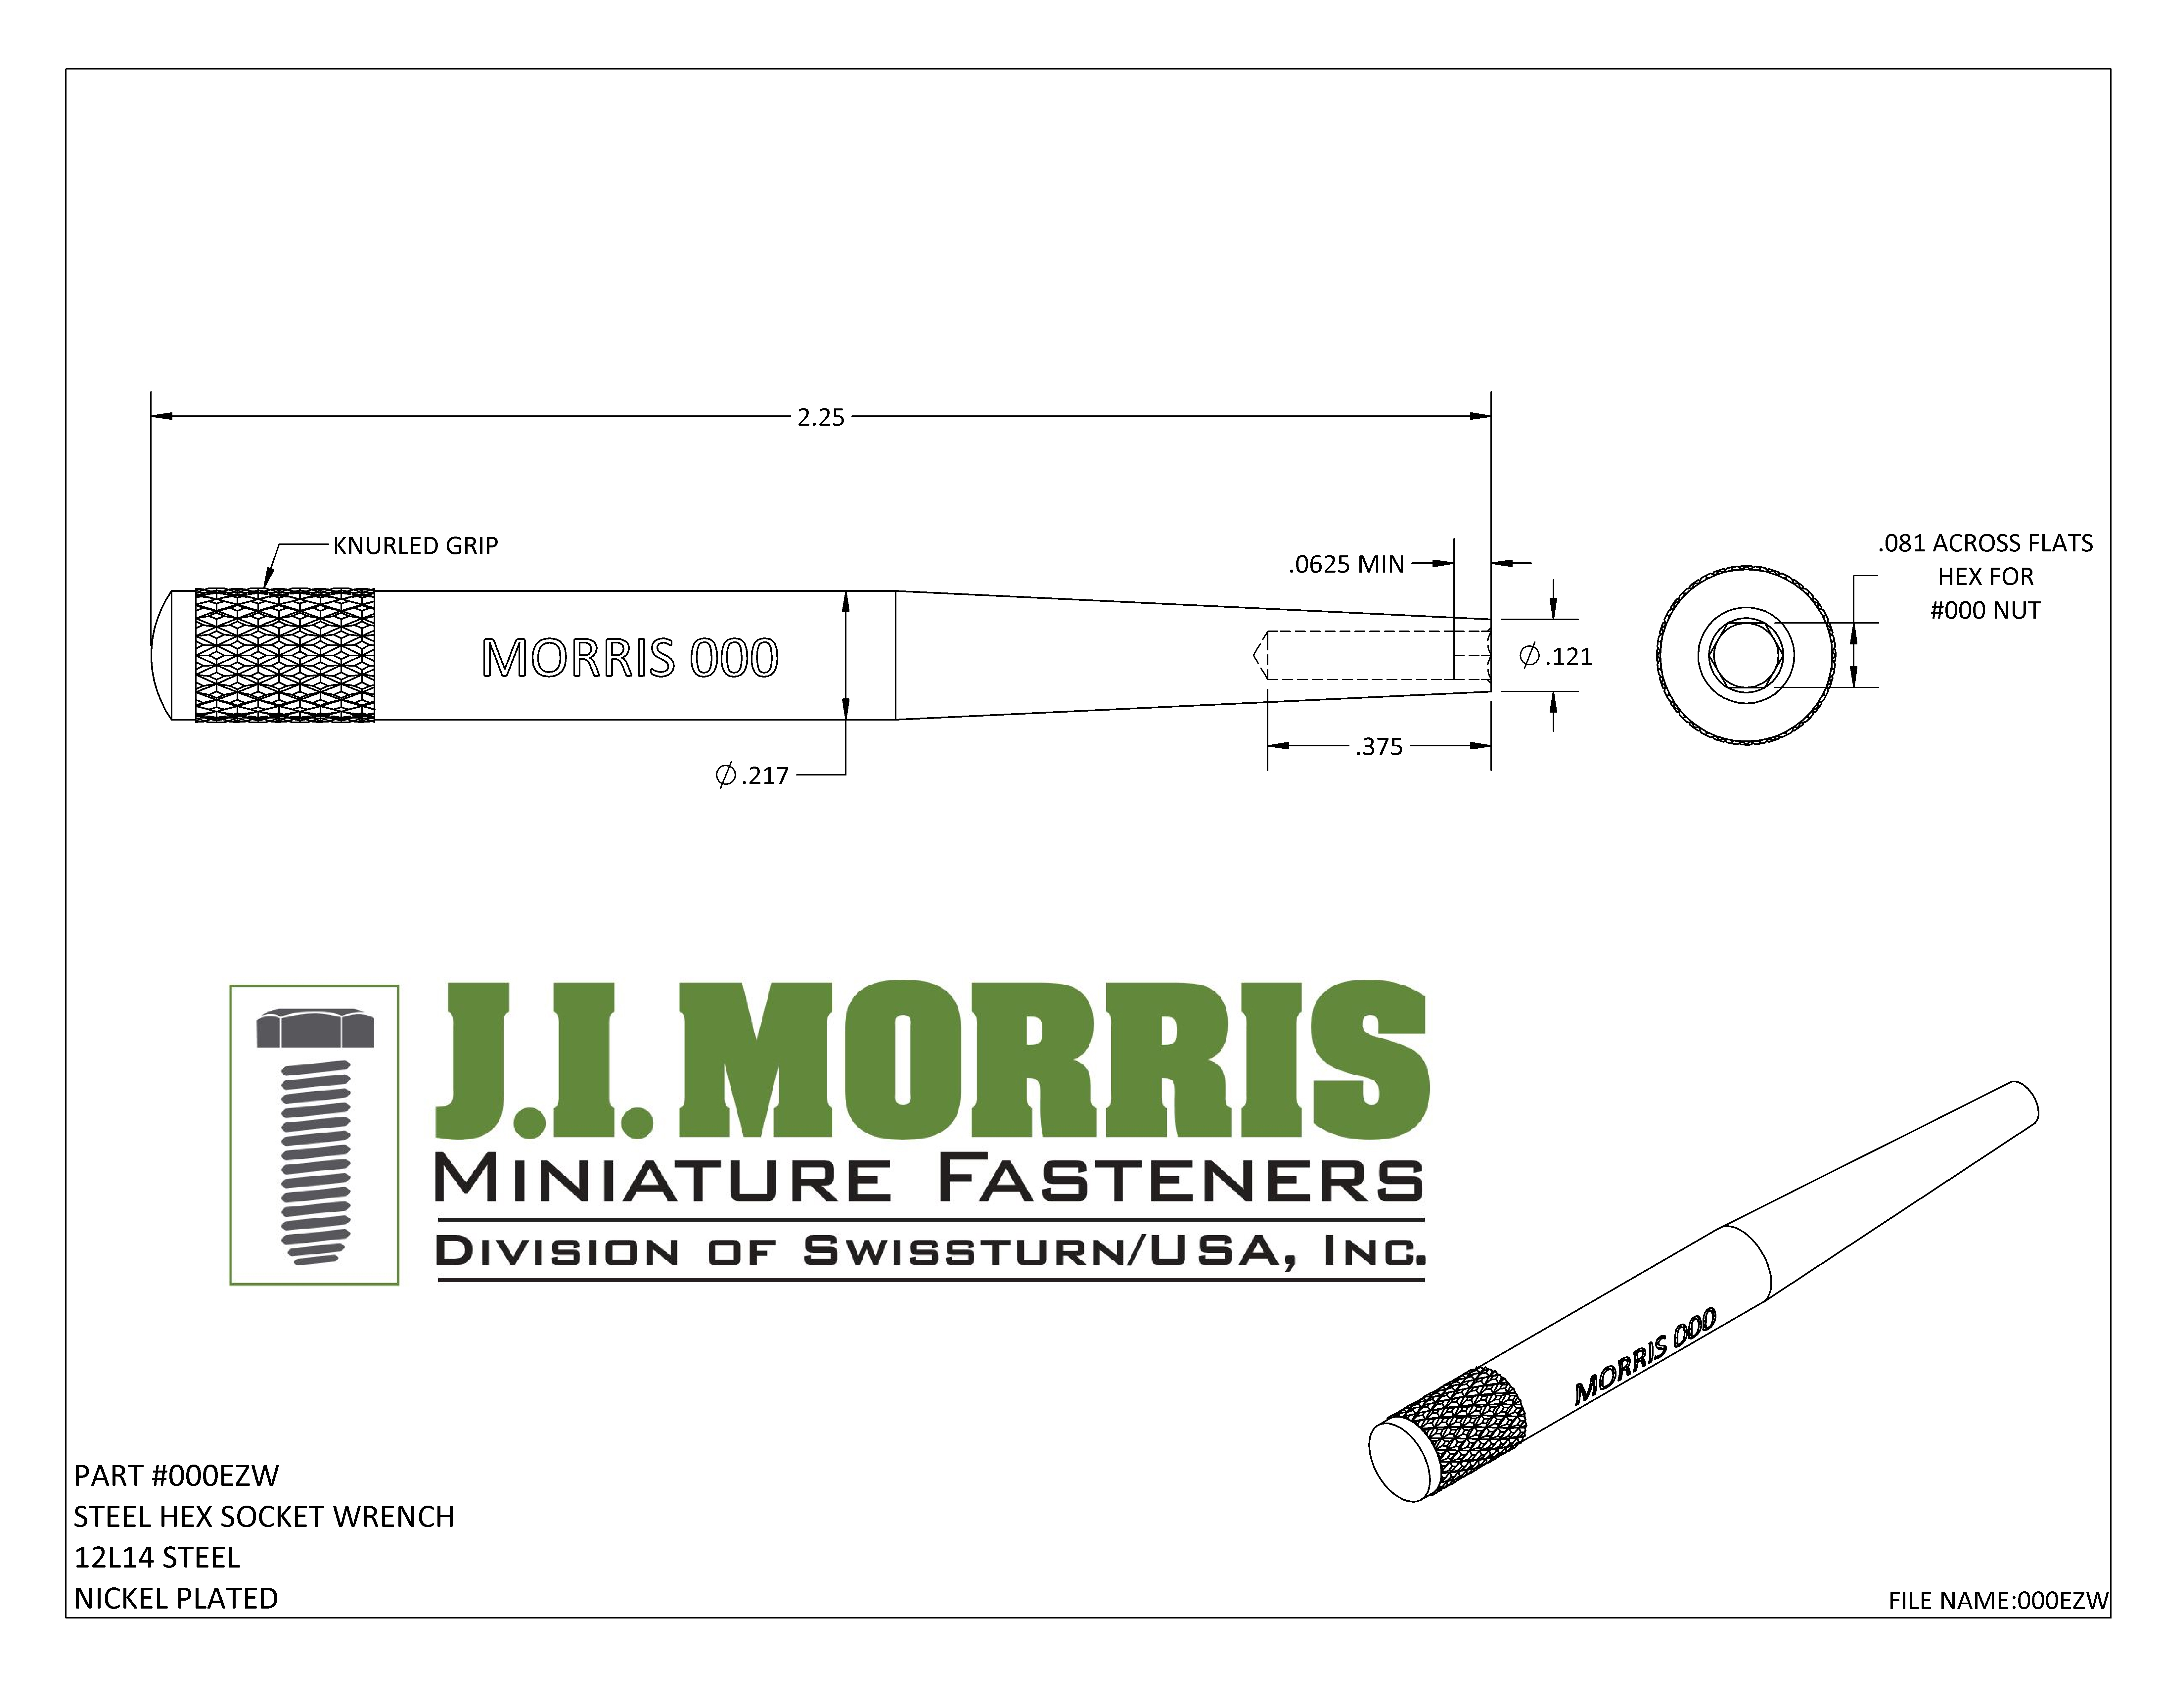 J I Morris hex triple-aught EZ socket wrench, 12L14 nickel plated steel, size 000